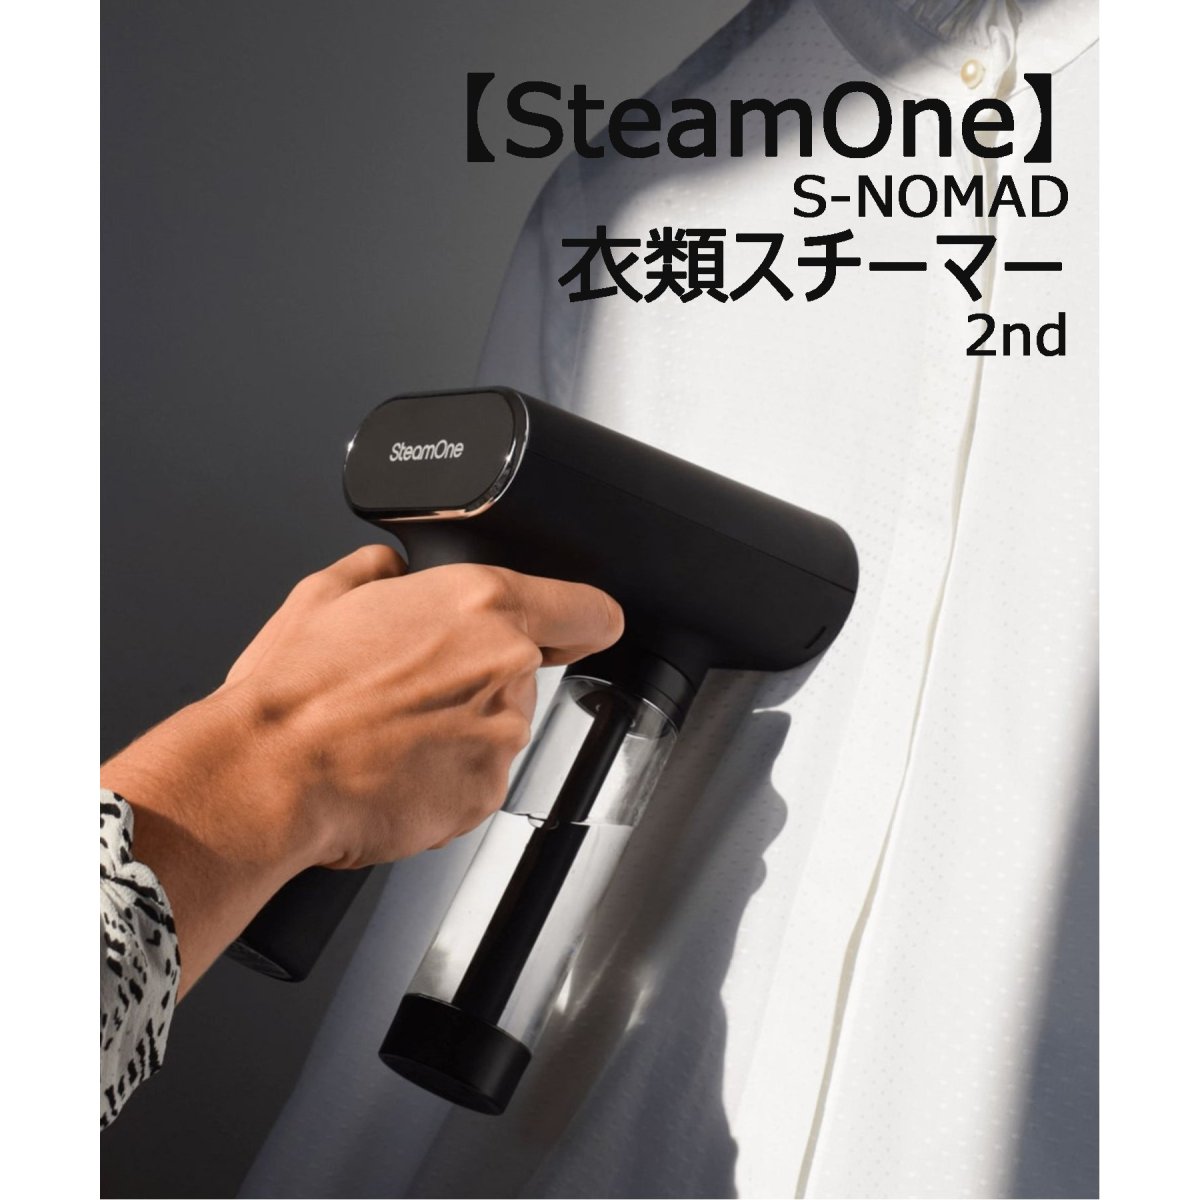 Steamone 衣類スチーマー - positivecreations.ca